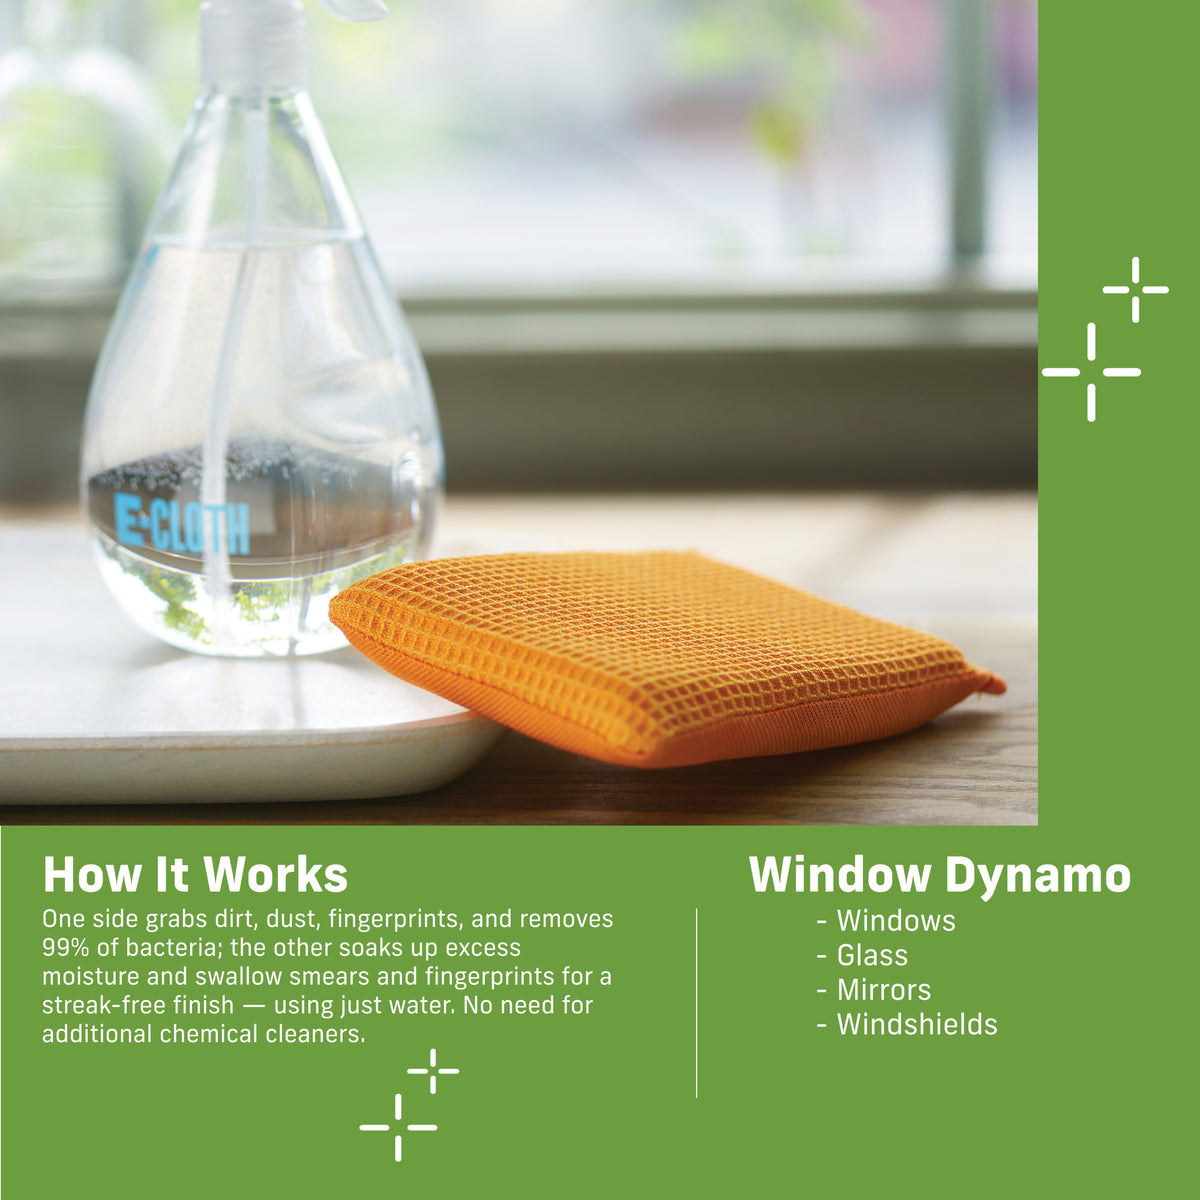 Window Dynamo